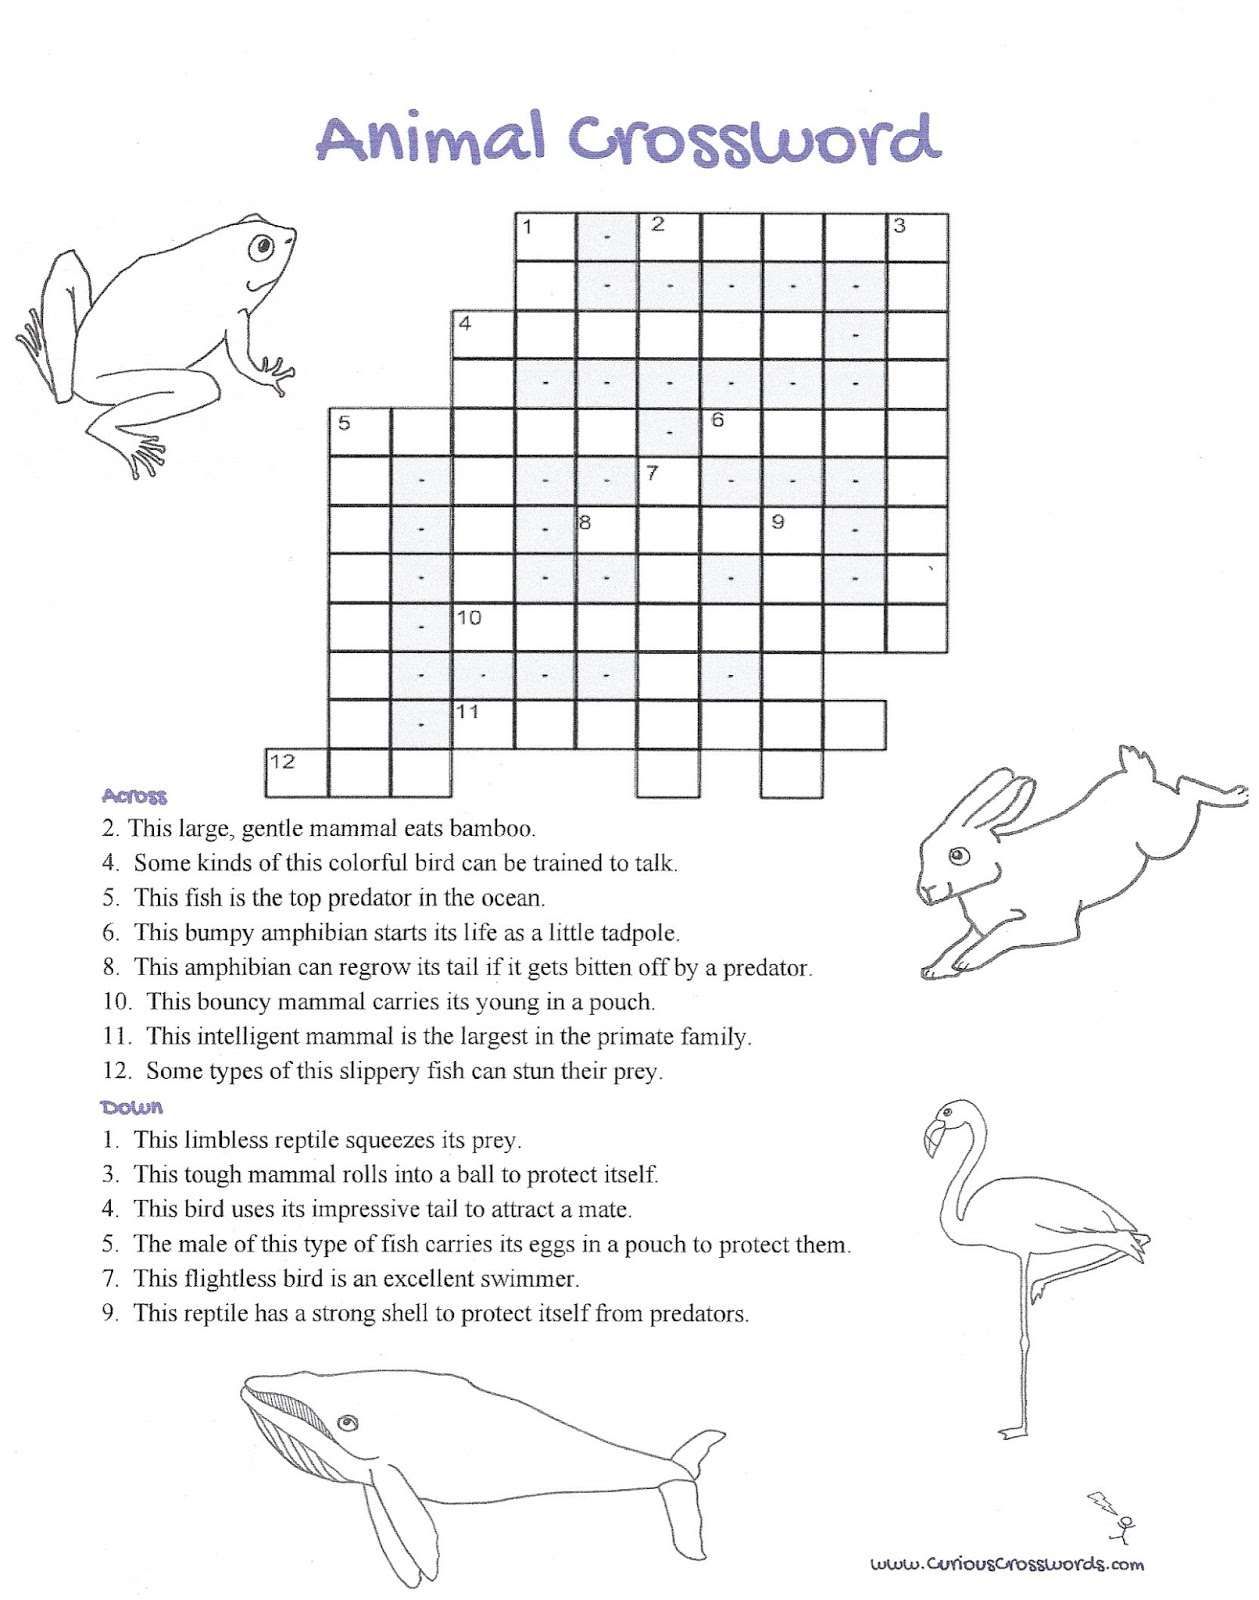 Curious Crosswords: Animal Crossword - Printable Crossword Animal